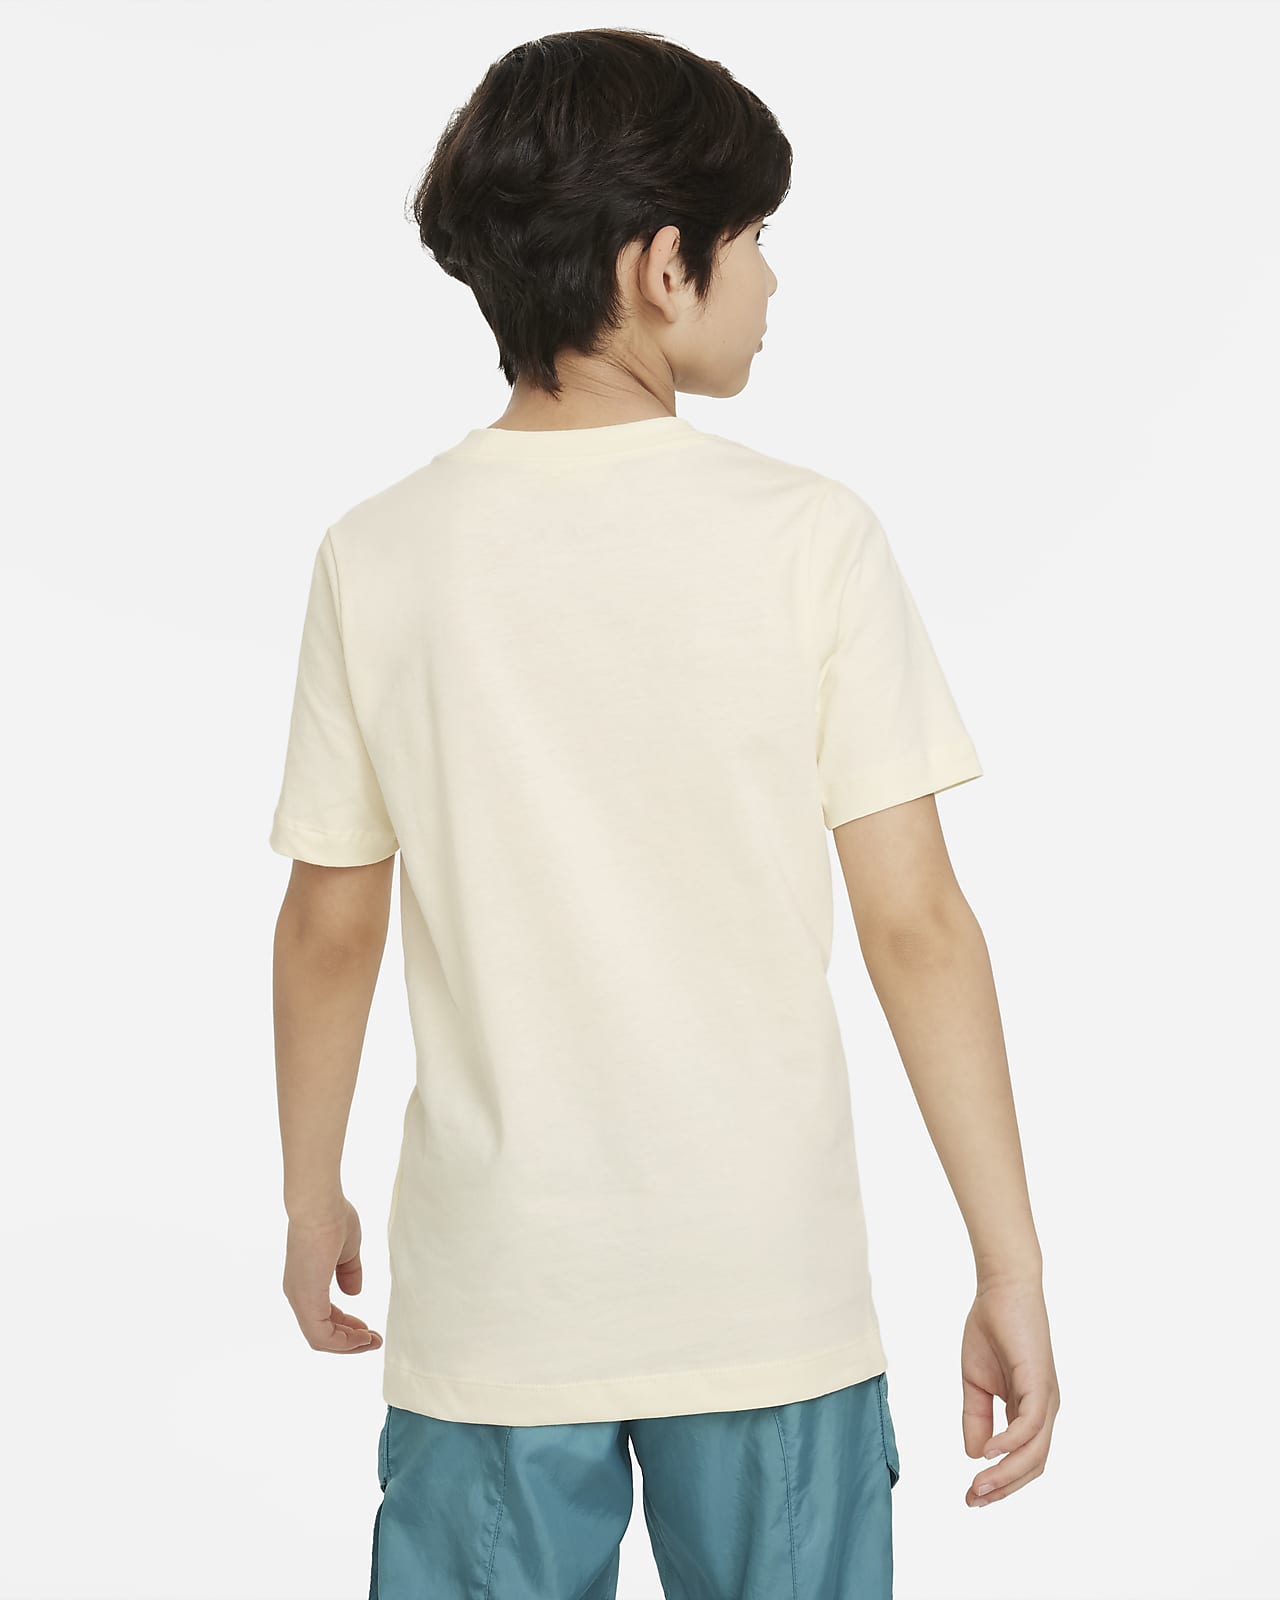 Nike Sportswear Older Kids' (Boys') T-Shirt. Nike SG